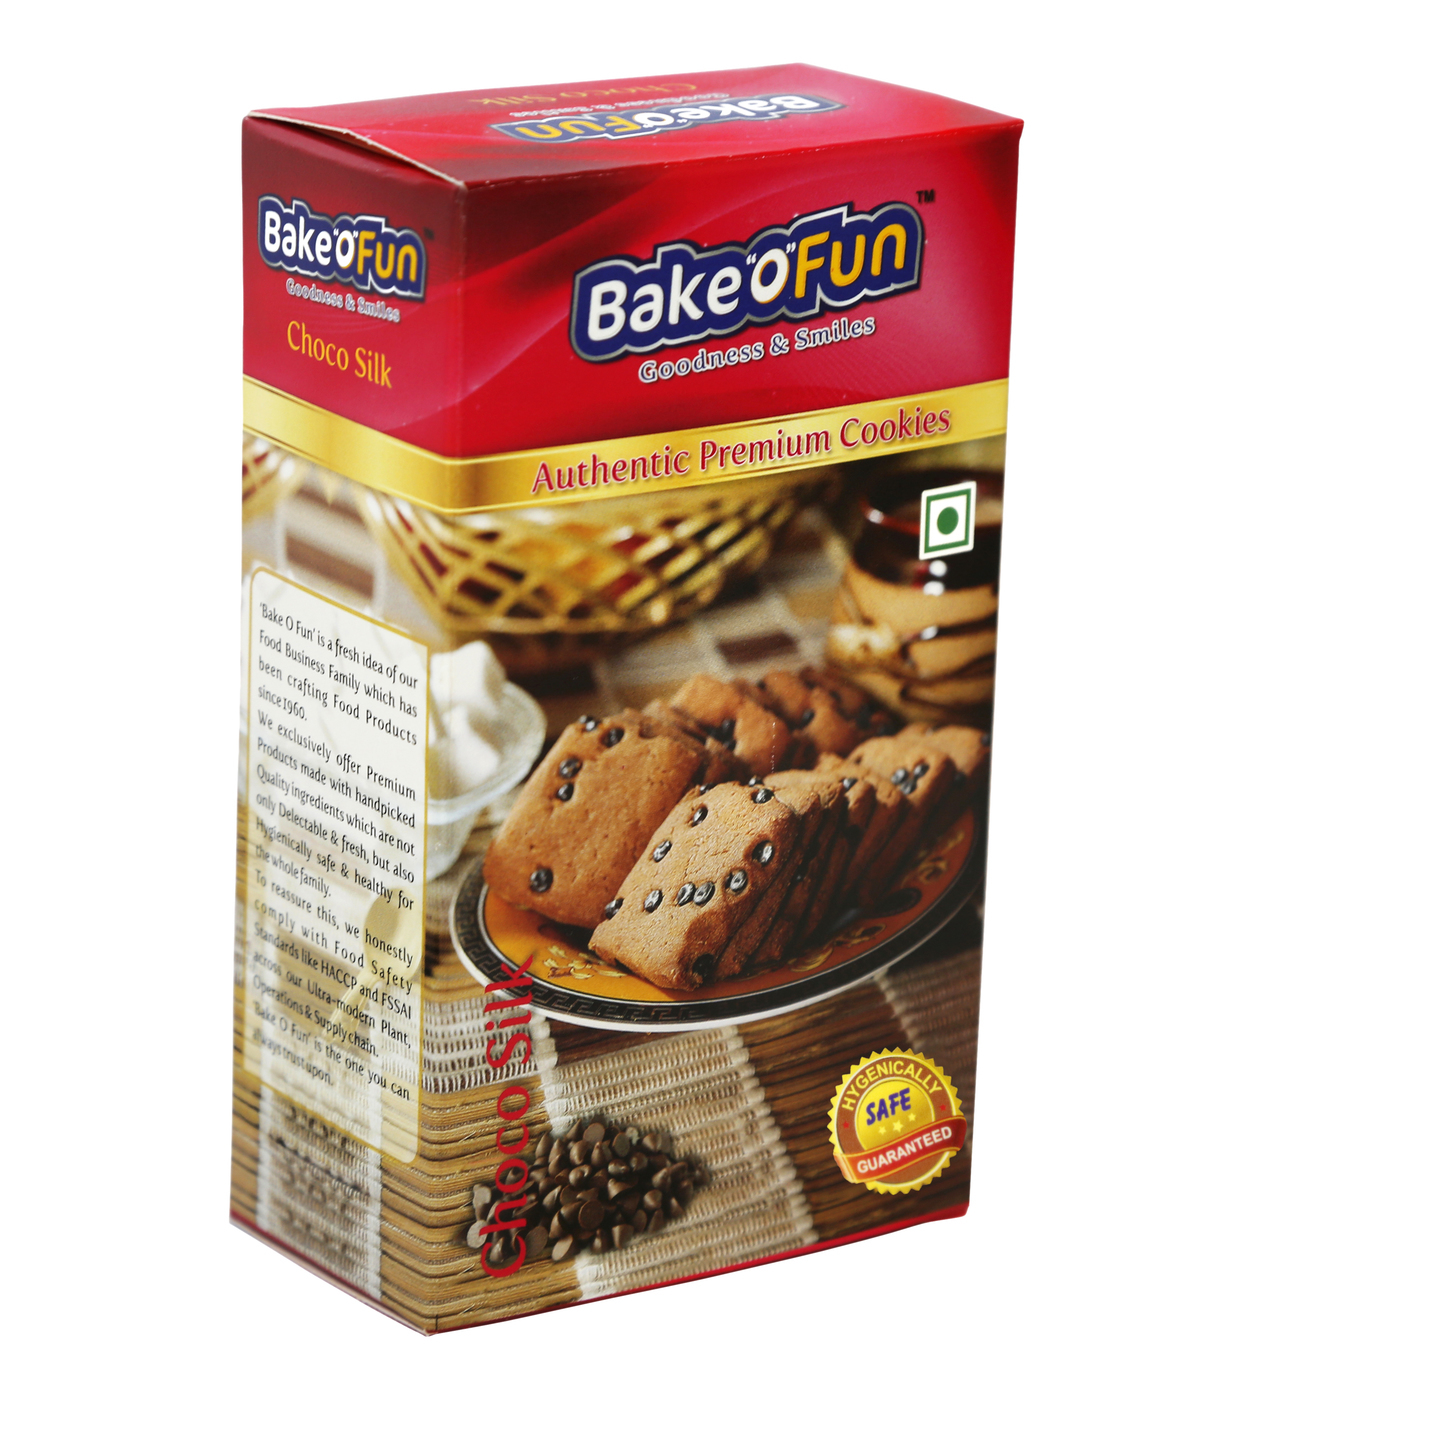 Bakeofun Choco Silk Cookies